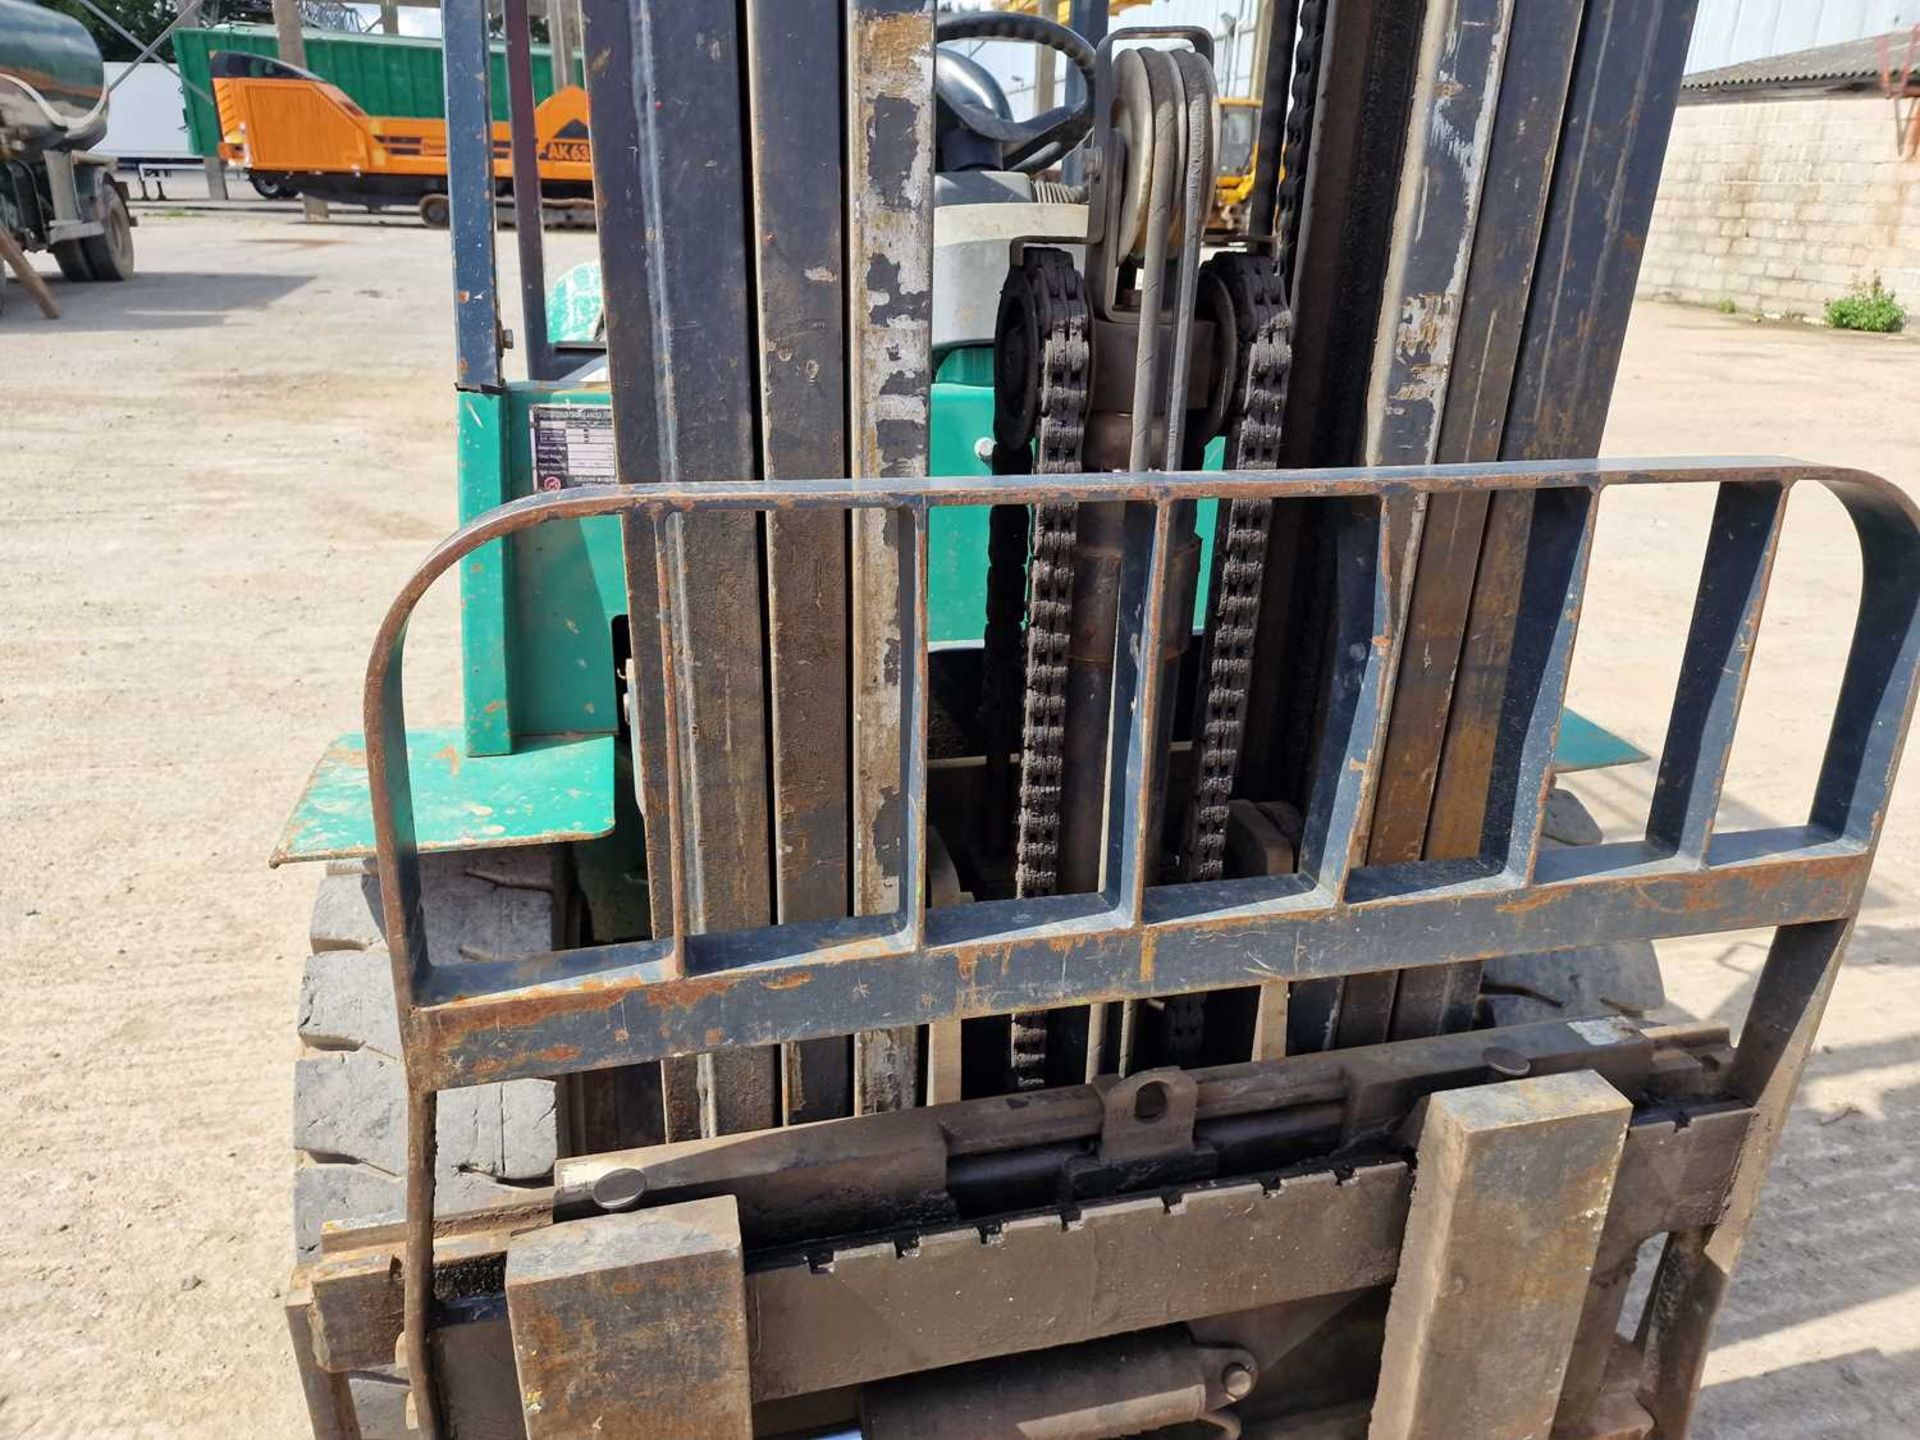 2015 Zhejiang FD40T 4 Ton Diesel Forklift, 3 Stage Free Lift Mast, Side Shift, Forks - Image 26 of 38